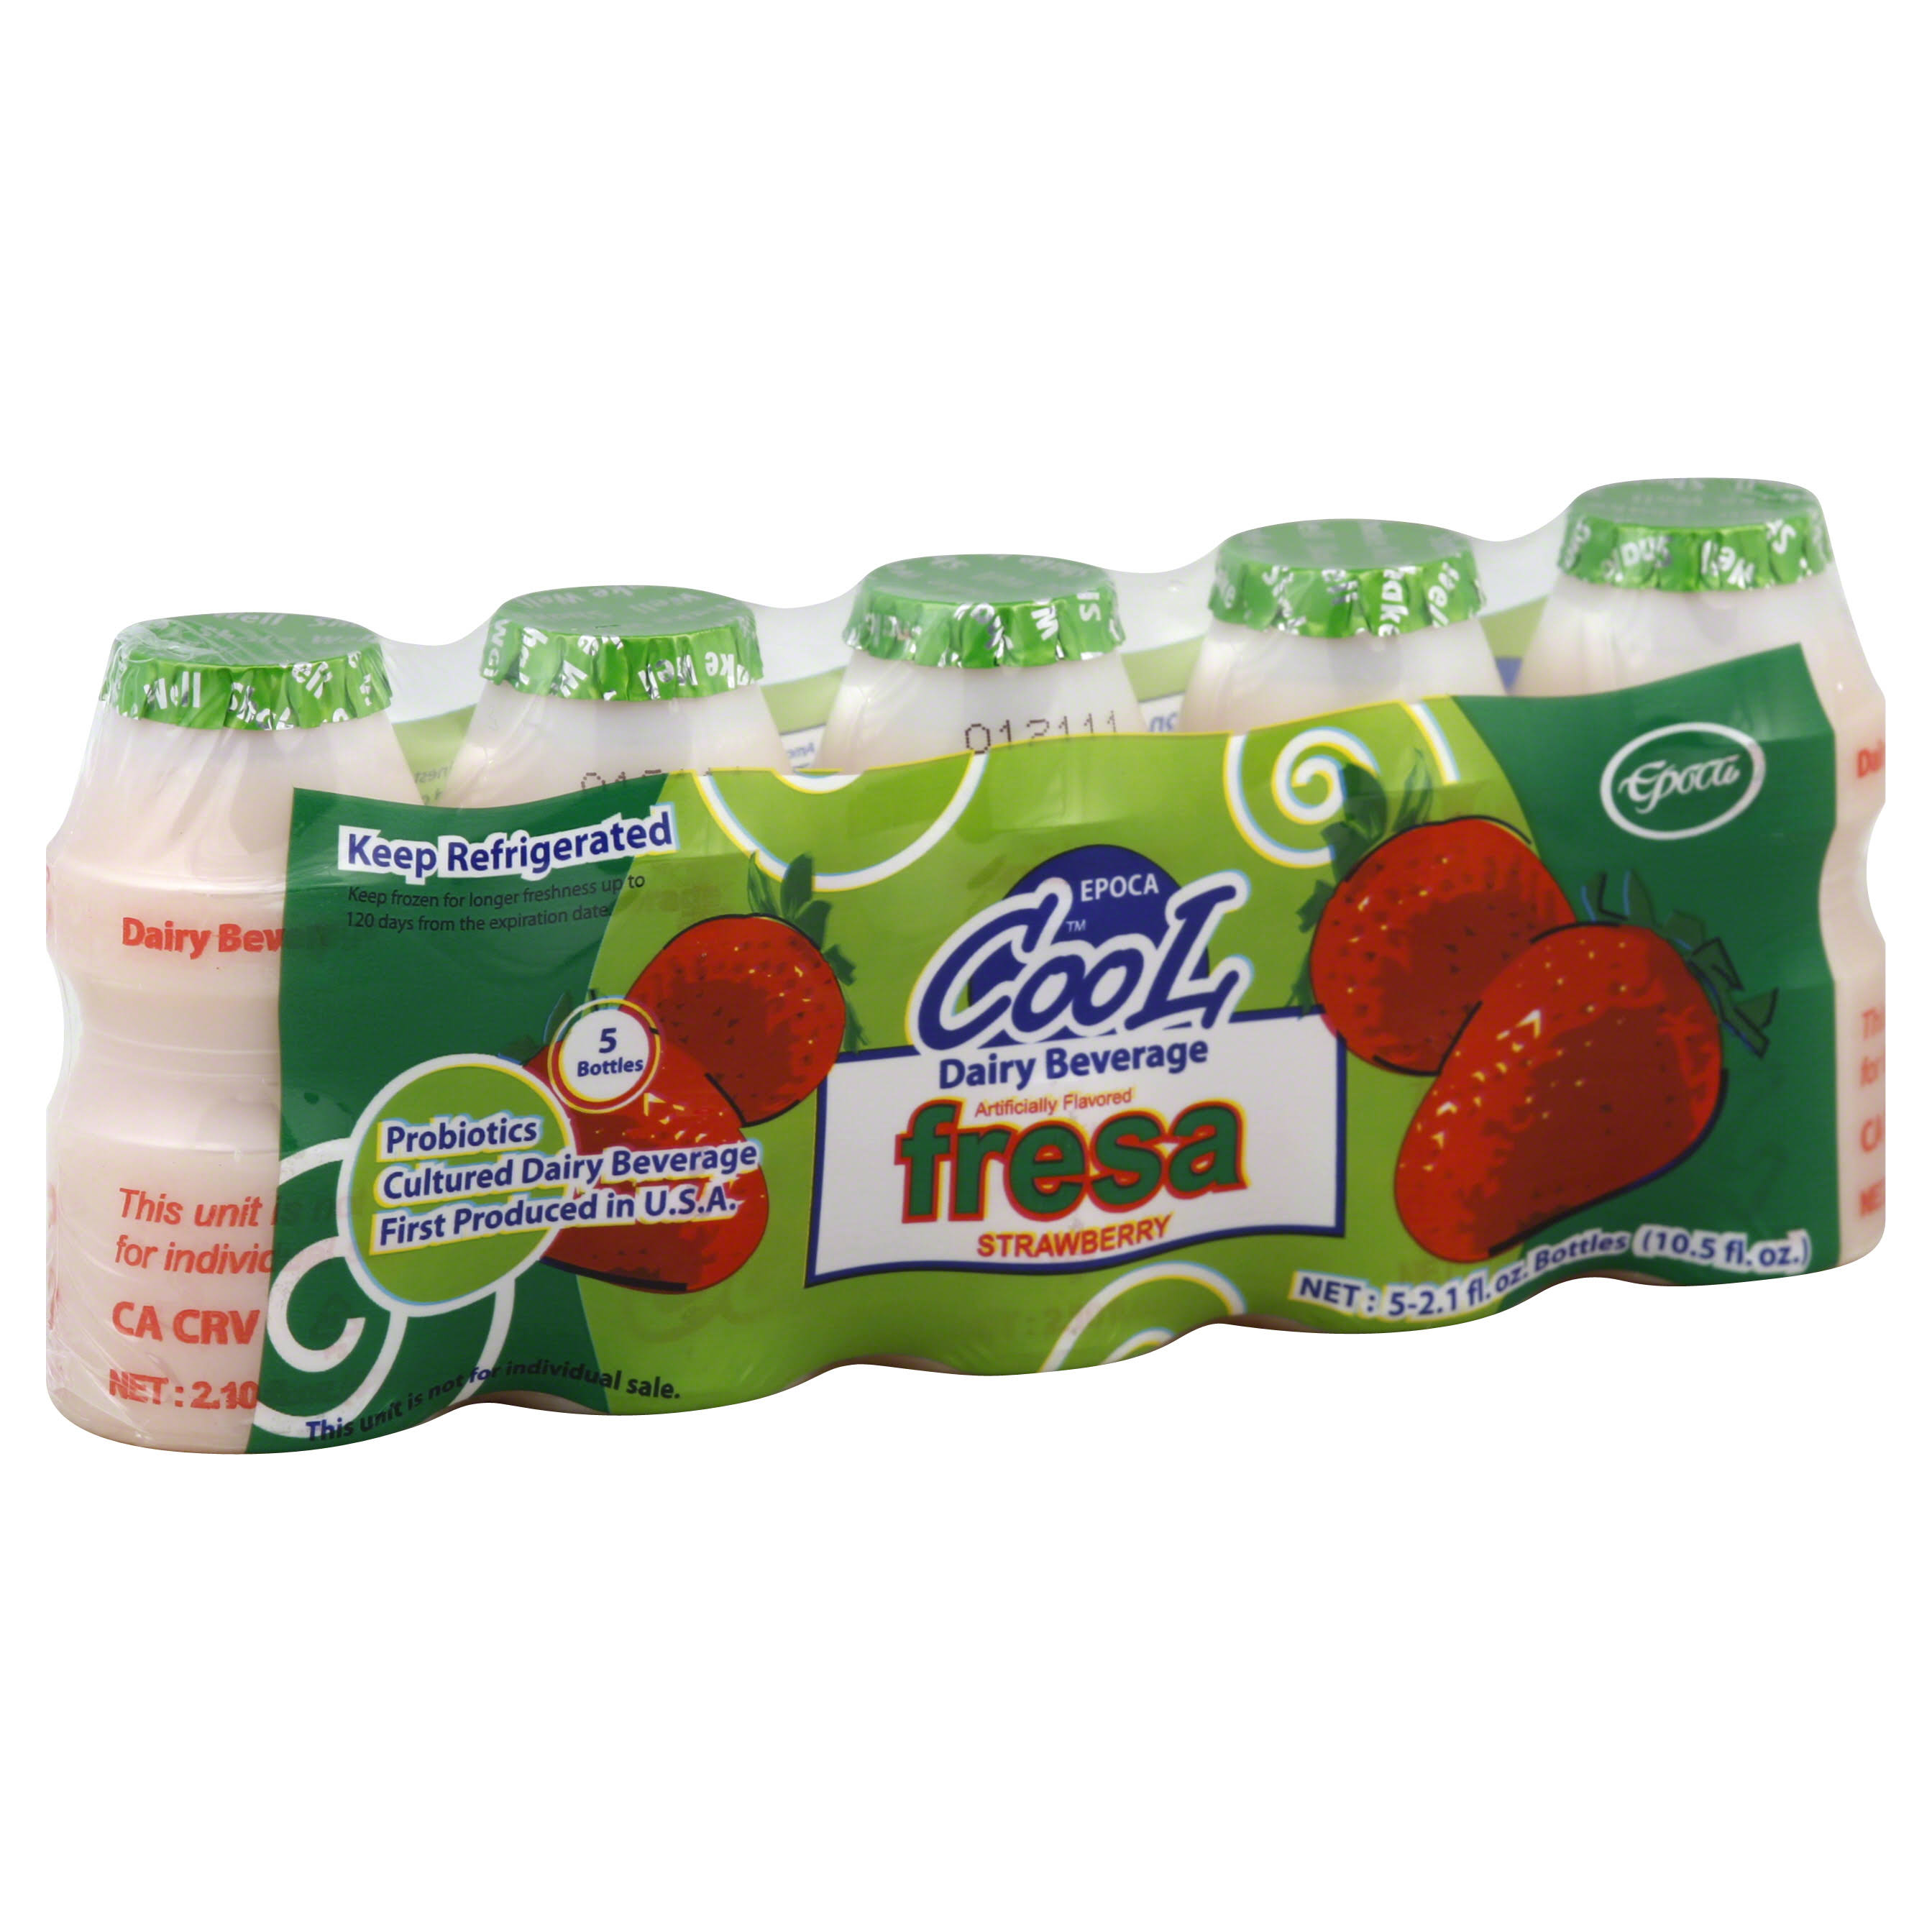 Epoca Dairy Beverage, Cool, Strawberry - 5 pack, 2.1 fl oz bottles